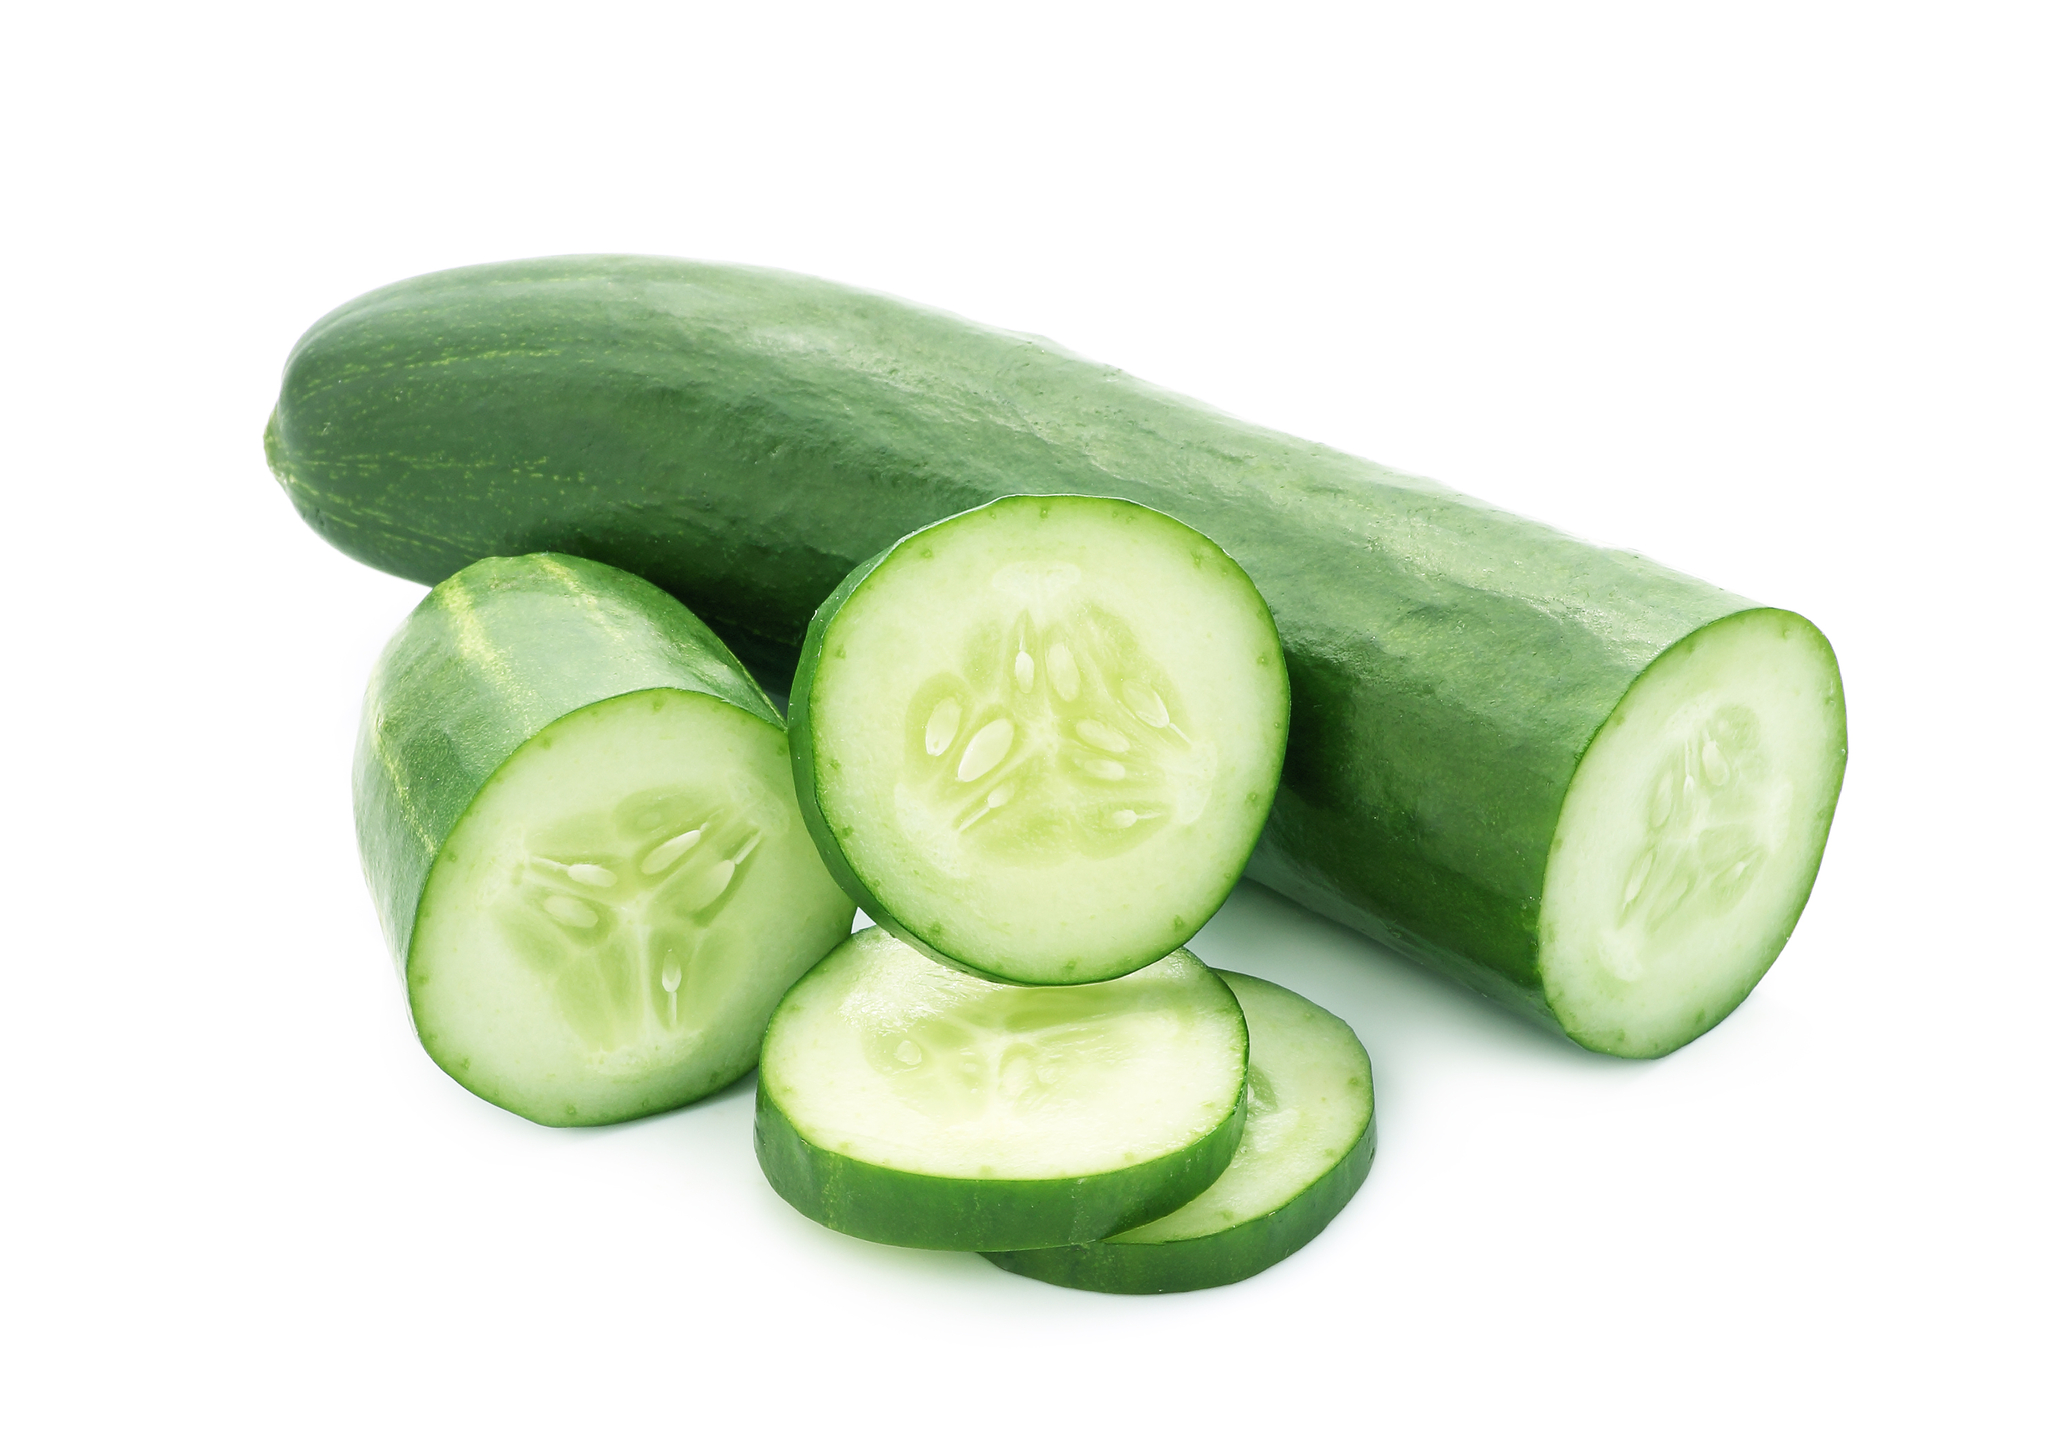 Cucumber ca320-420g/st price per st Netherlands